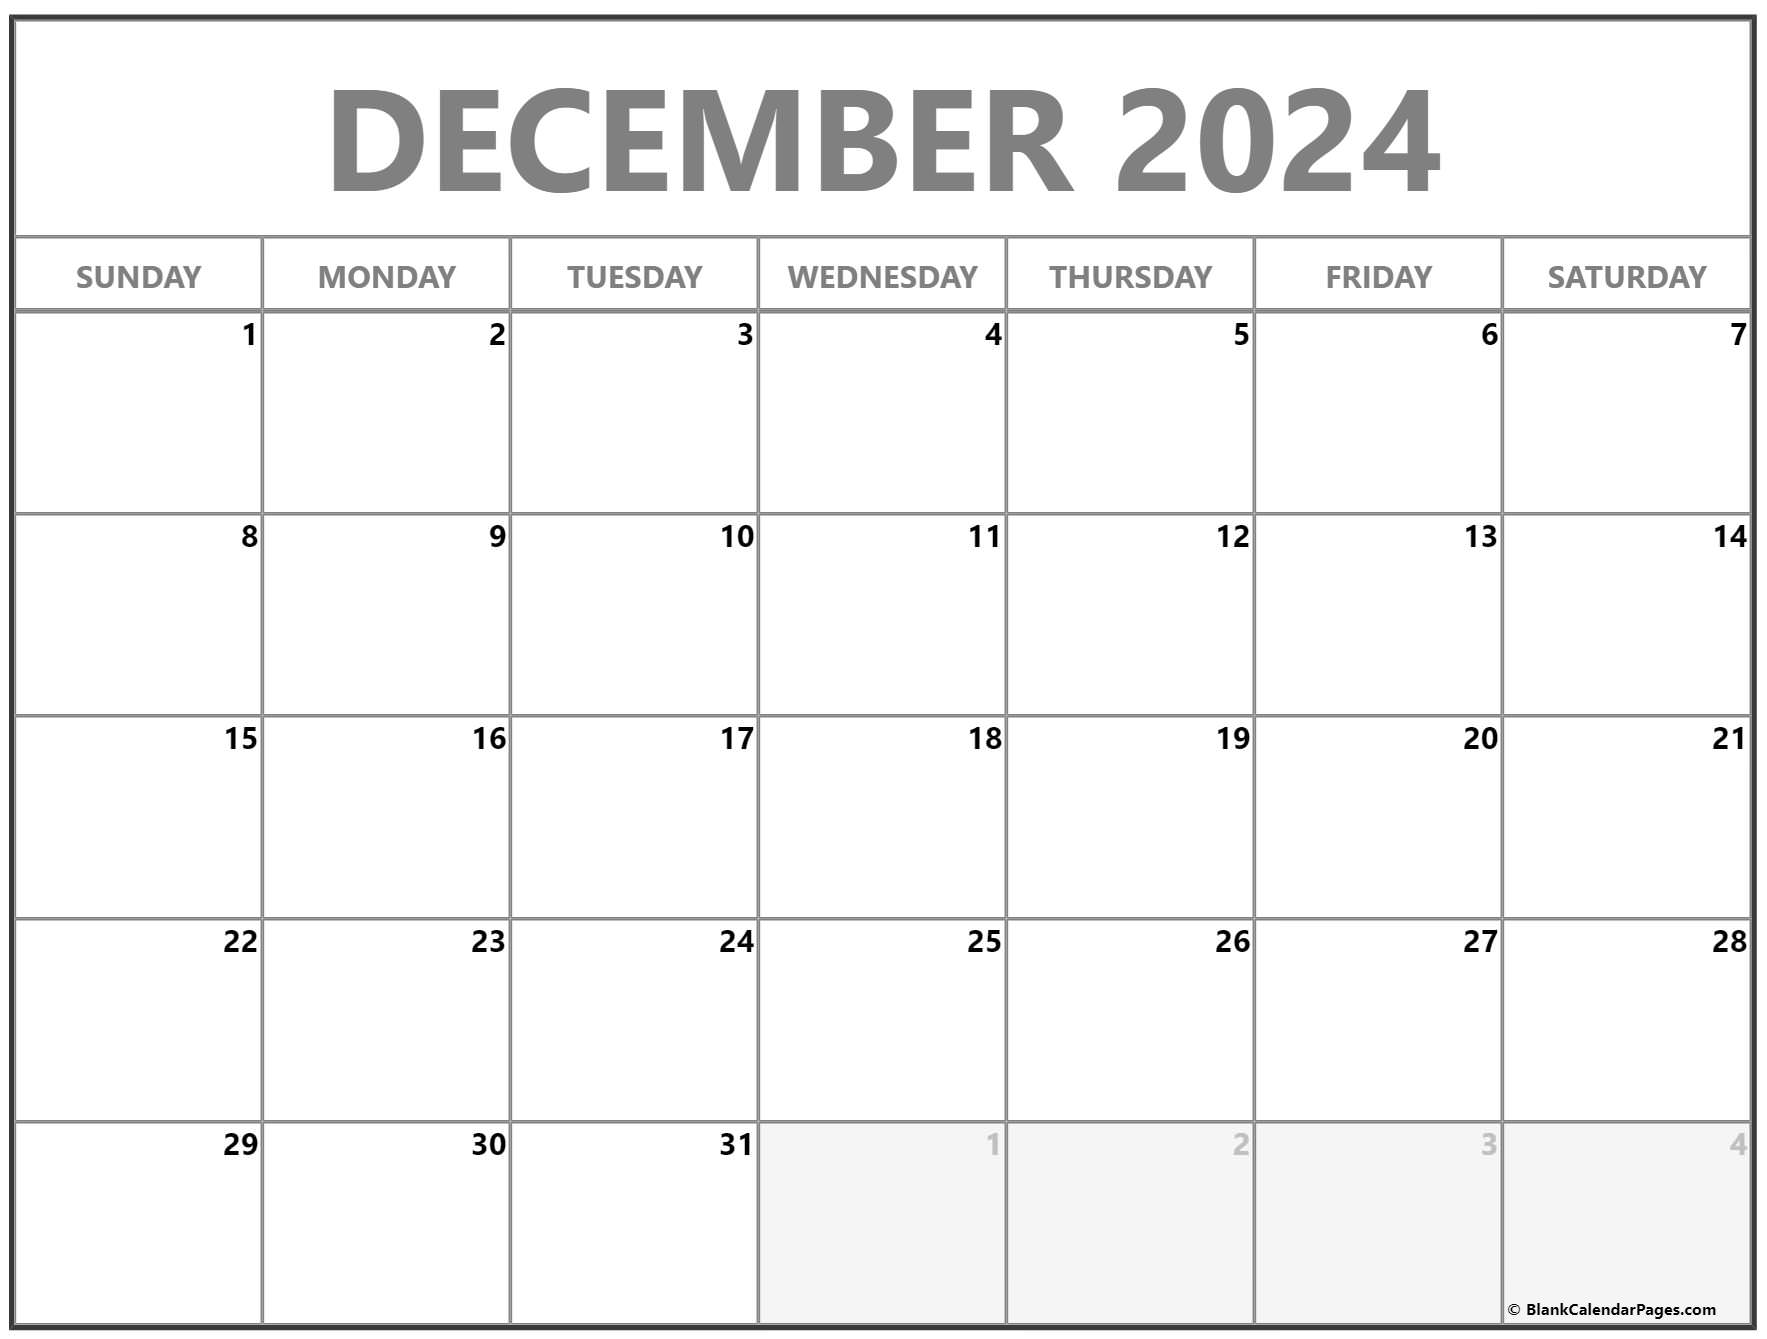 fsu-uconn-spring-calendar-aug-sept-2022-calendar-print-november-template-calendar-customized